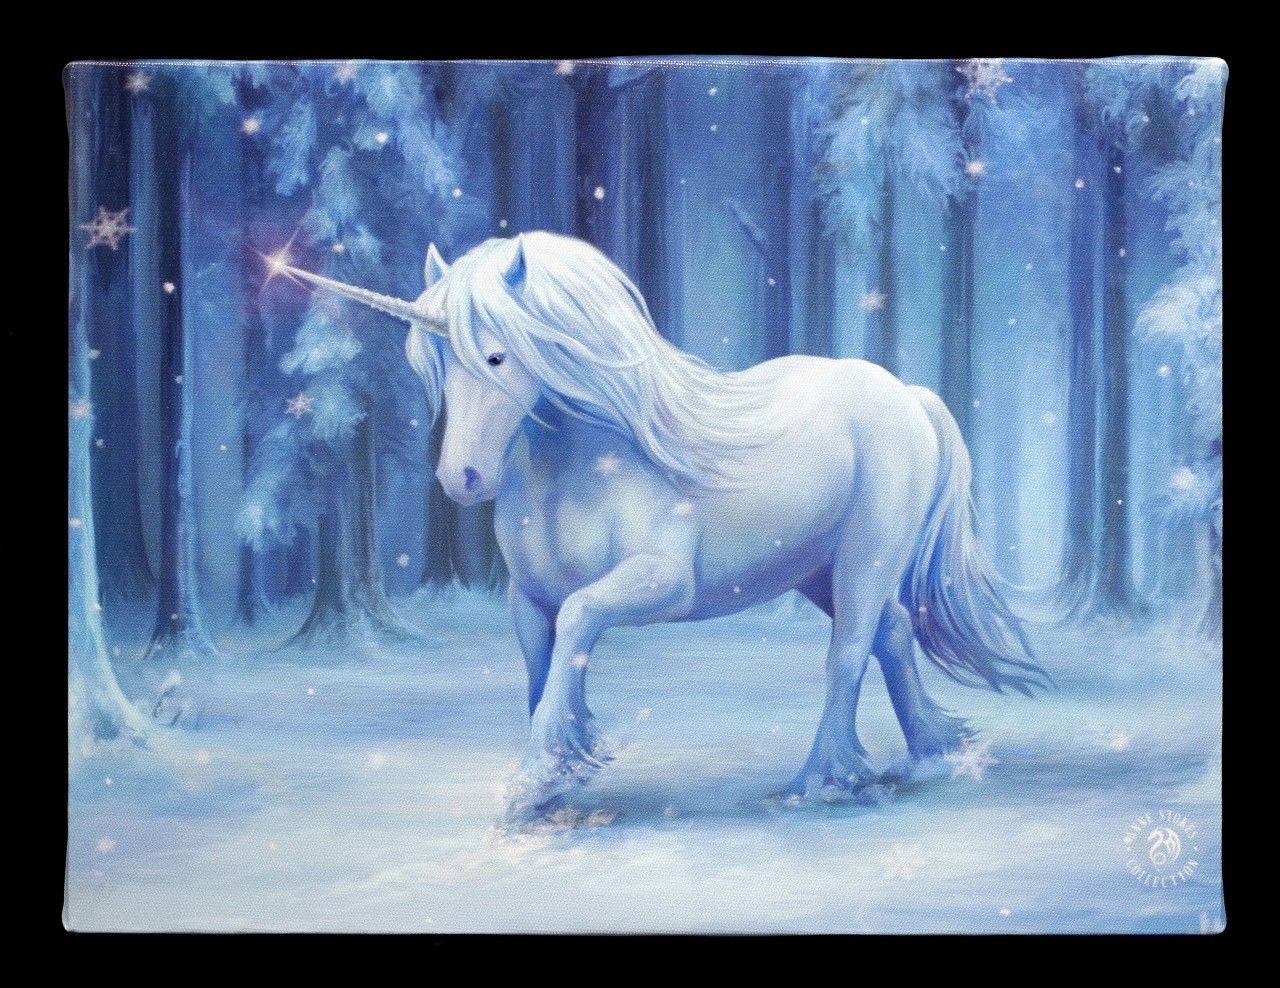 Small Canvas with Unicorn - Winter Wonderland